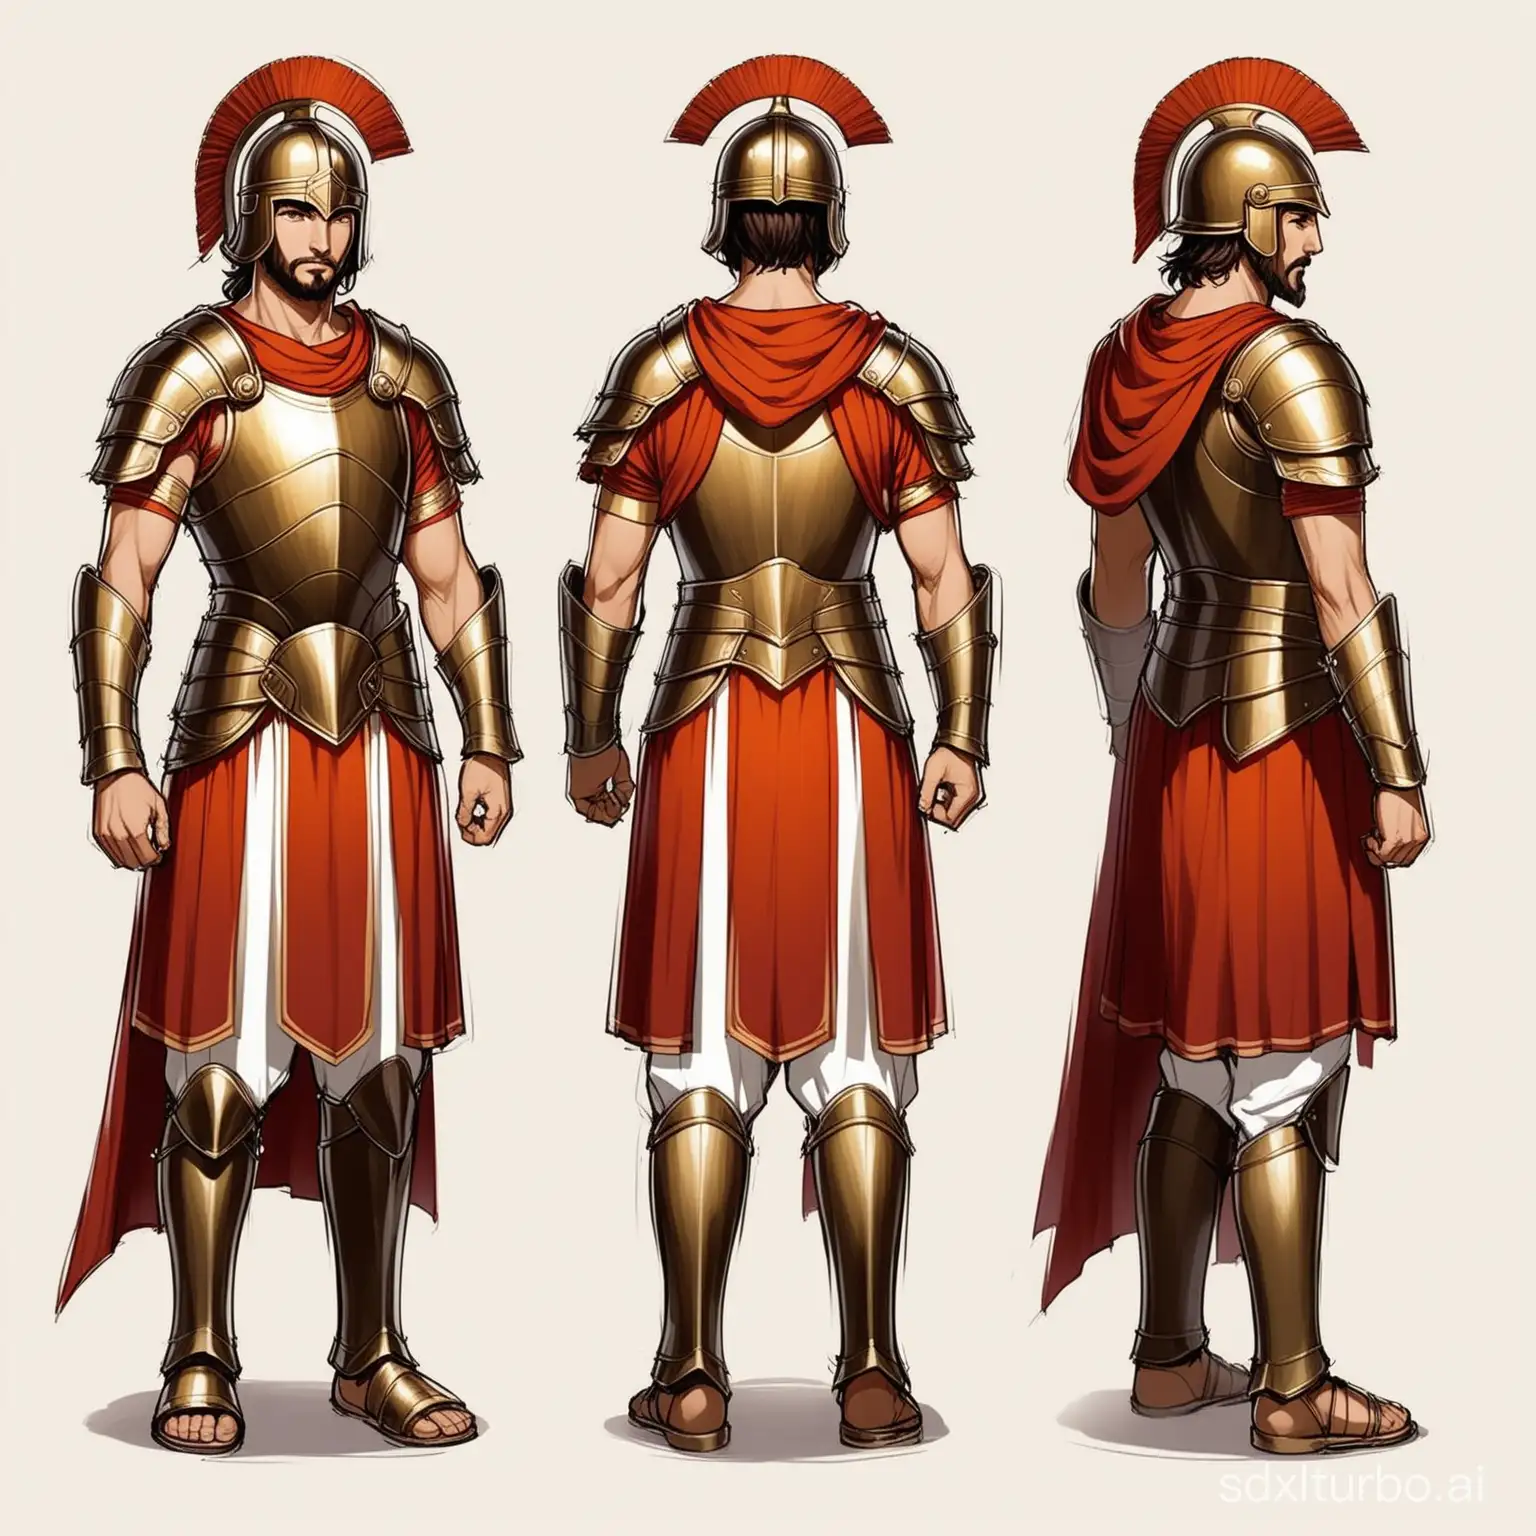 Young-Carthaginian-Warrior-Seeking-Revenge-on-Romans